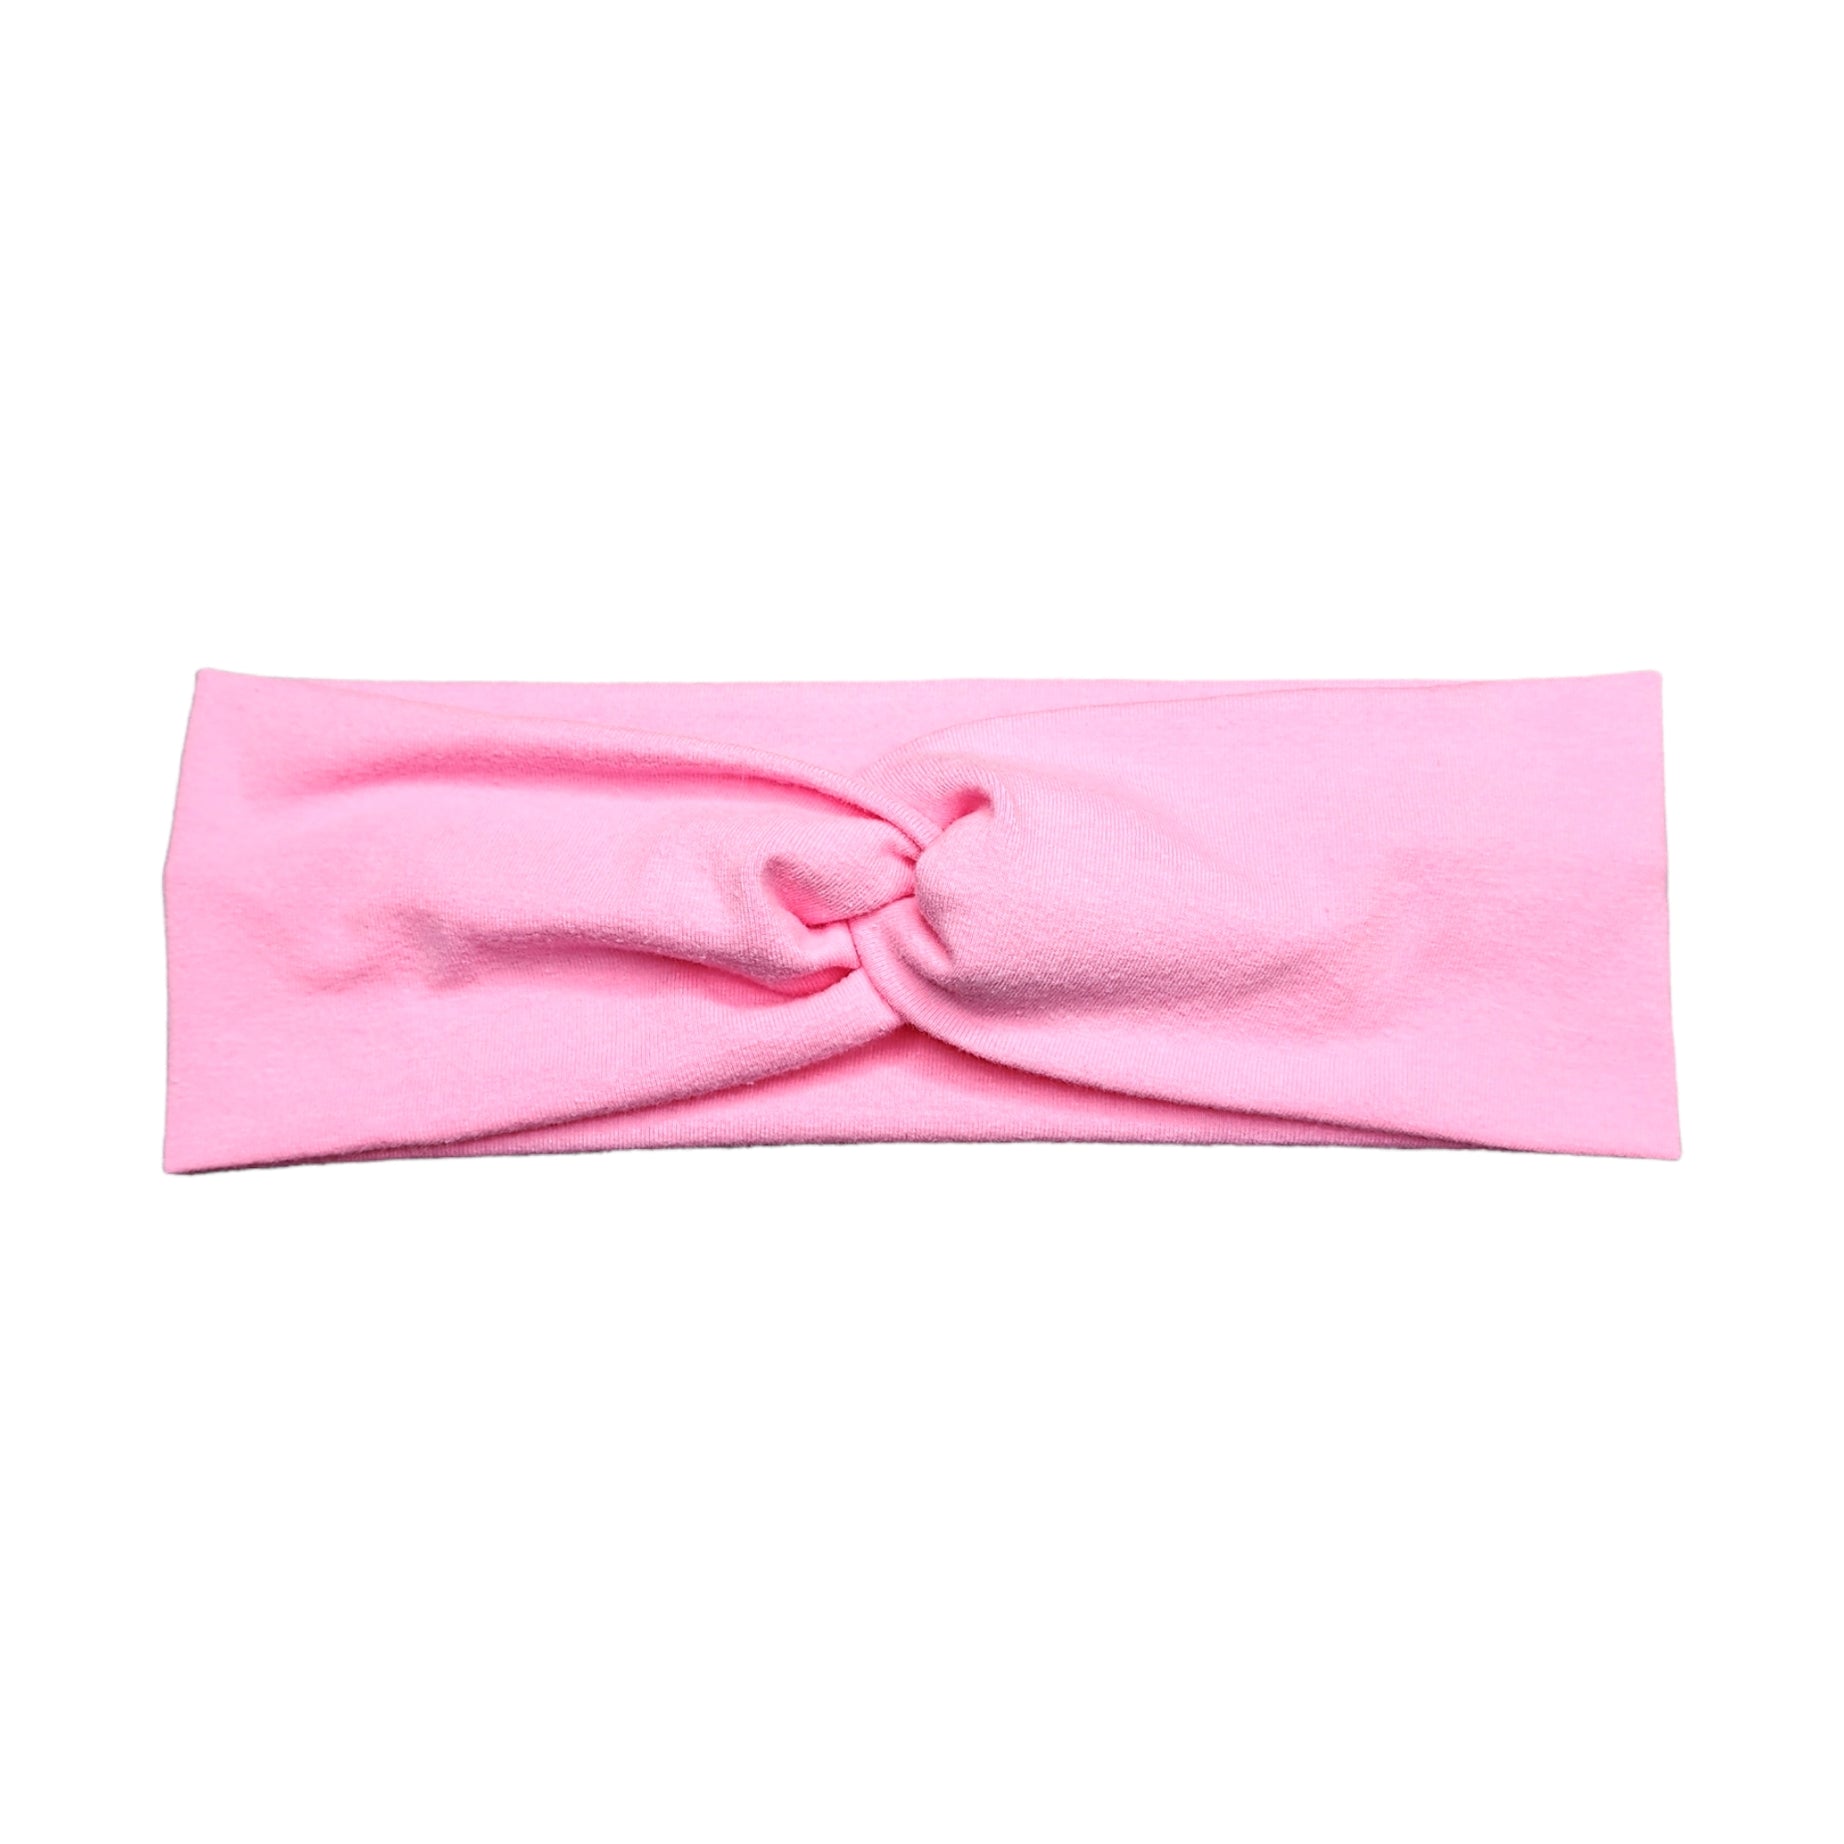 Solid Bubblegum Pink Twist Headband, Cotton Spandex